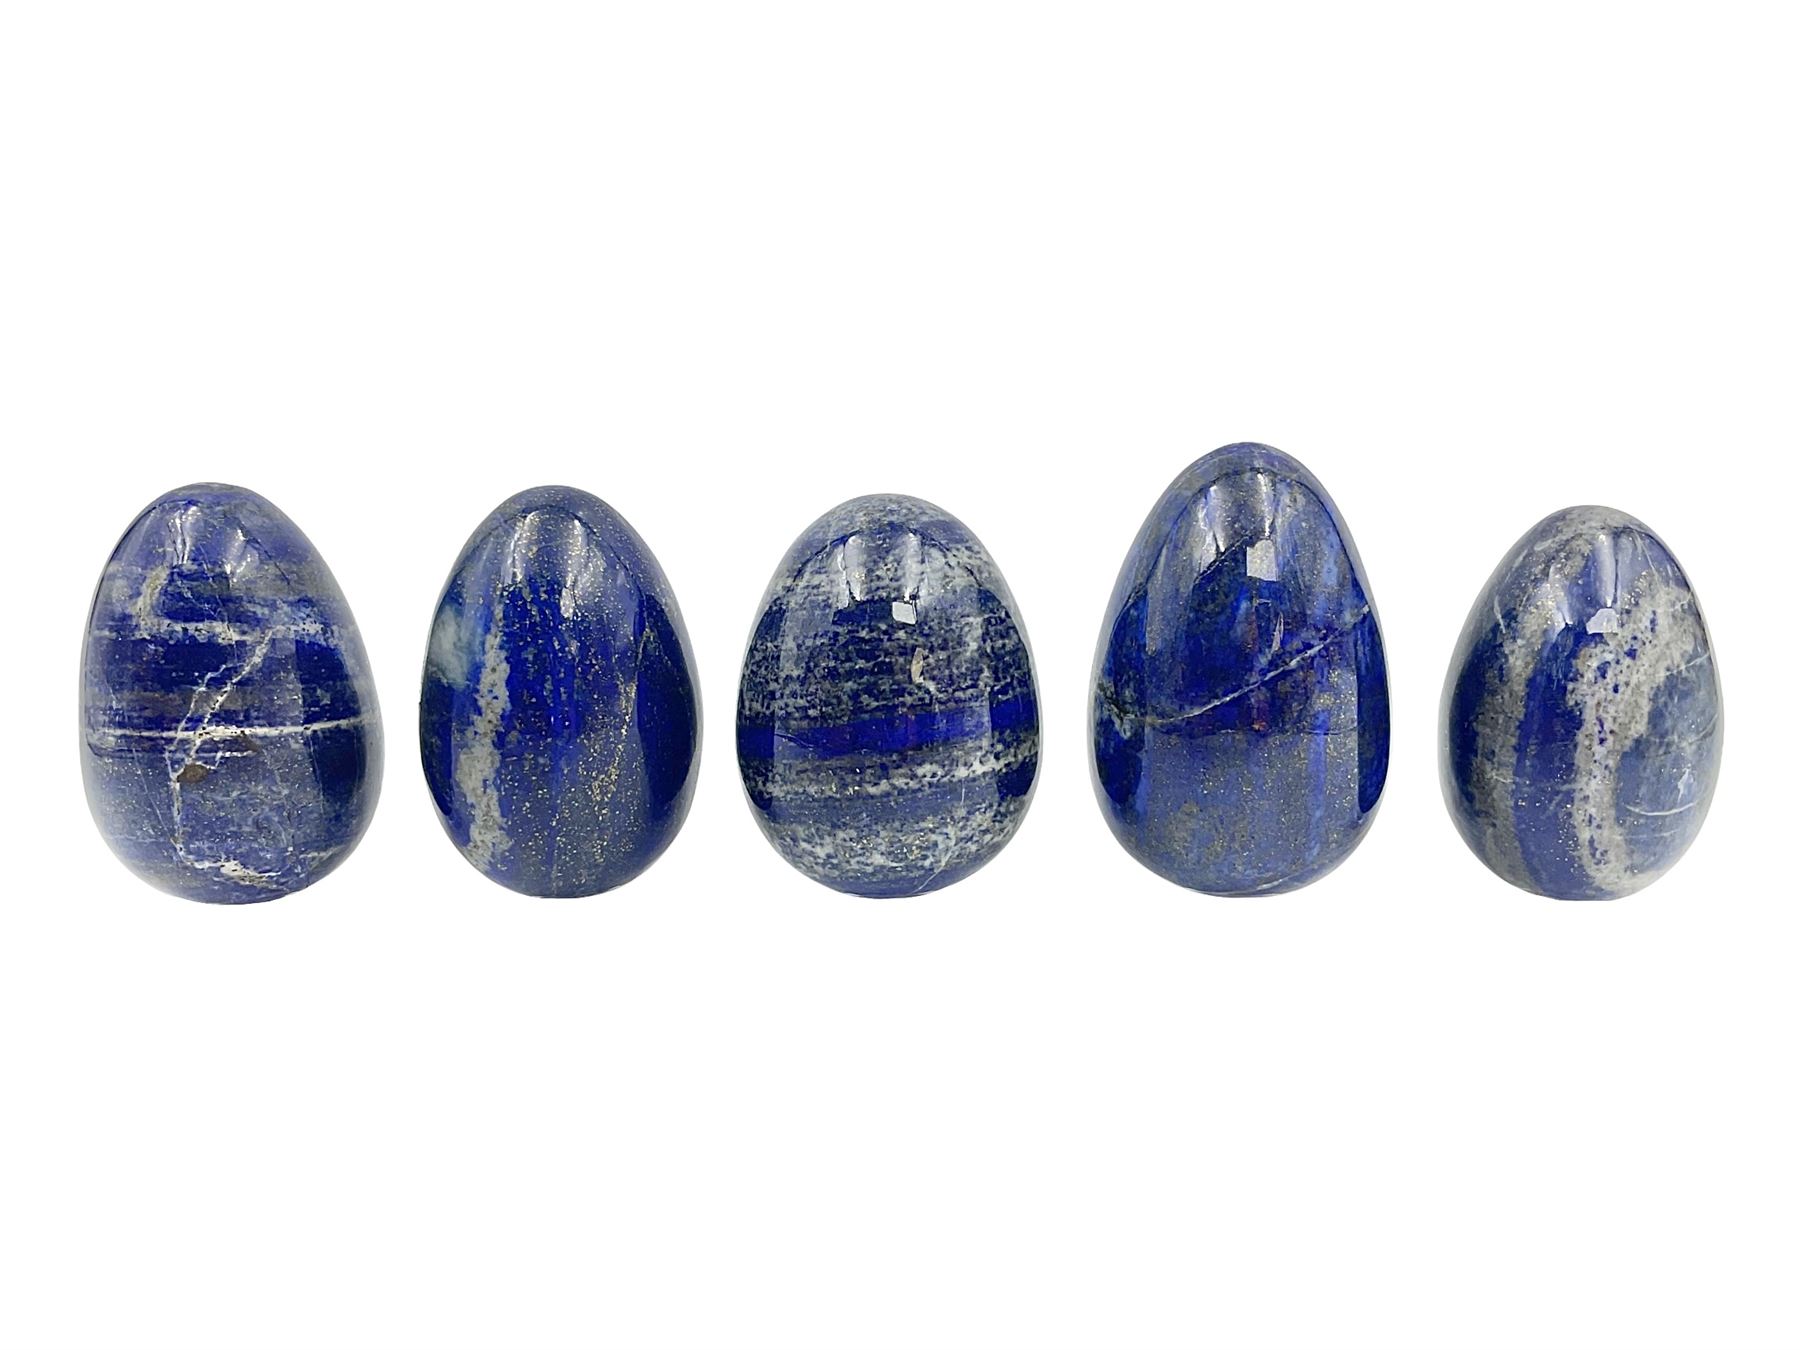 Collection of five Lapis lazuli specimen eggs